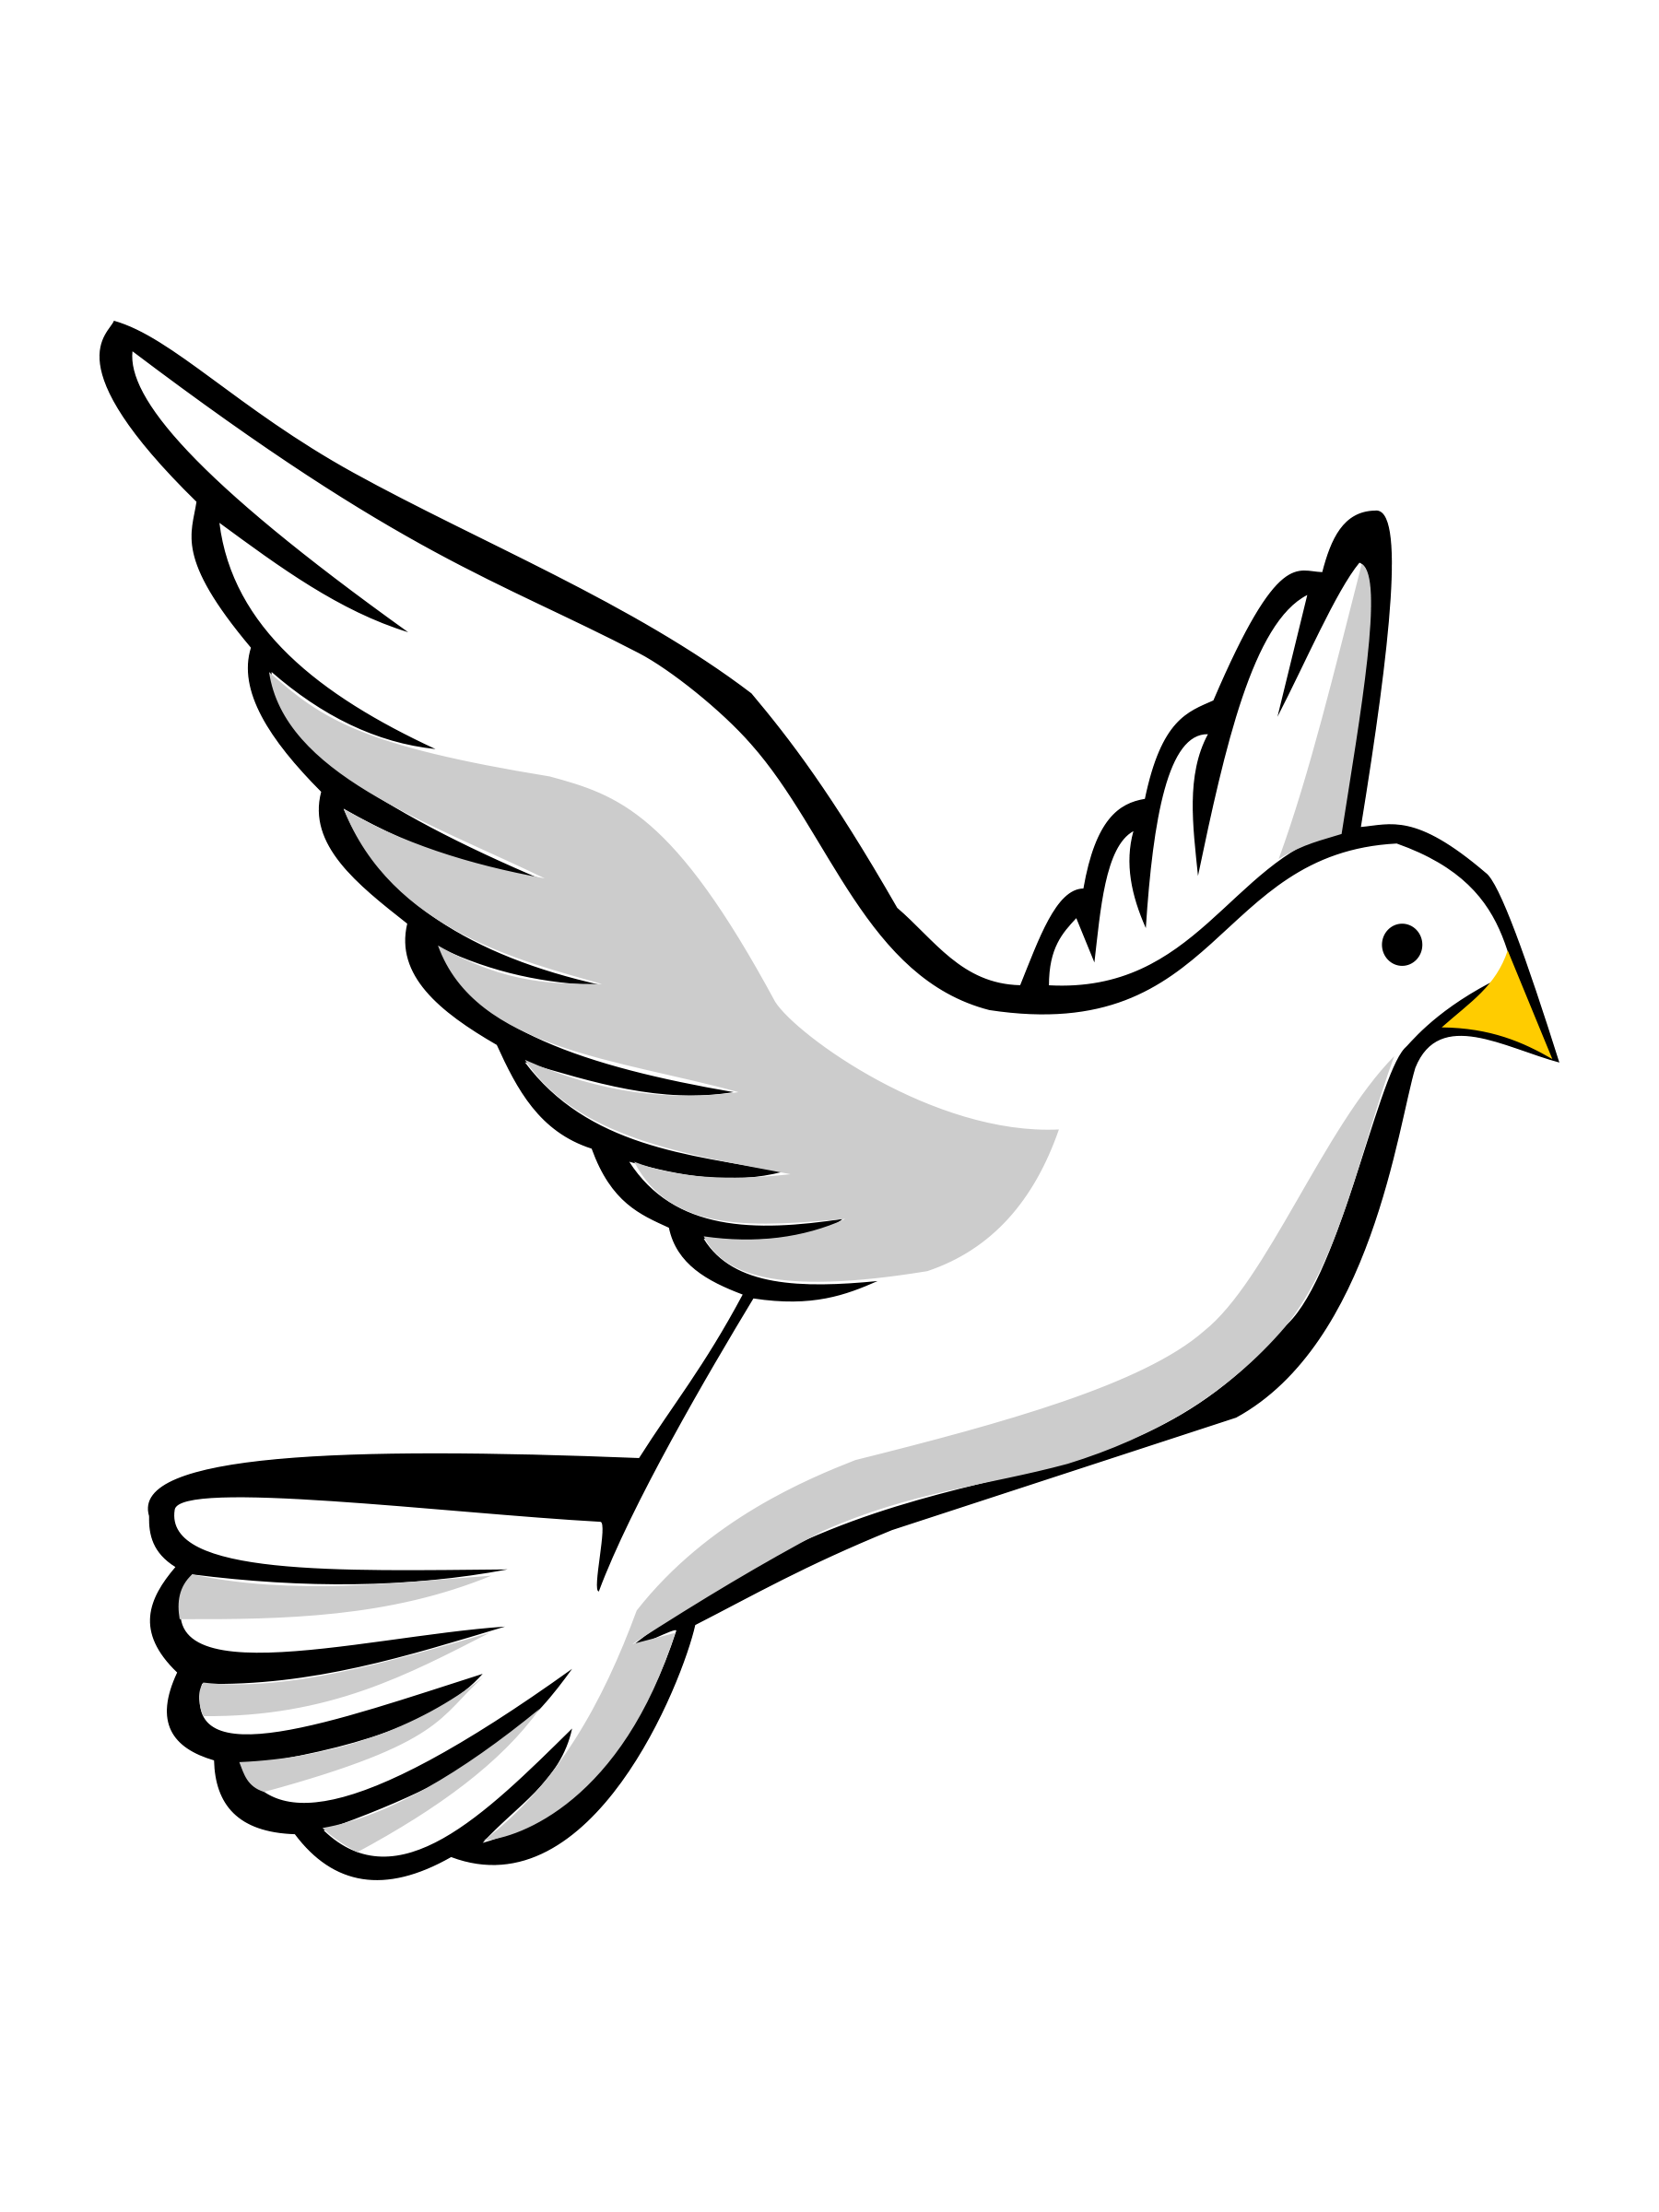 Holy spirit dove clipart black and white free 2 